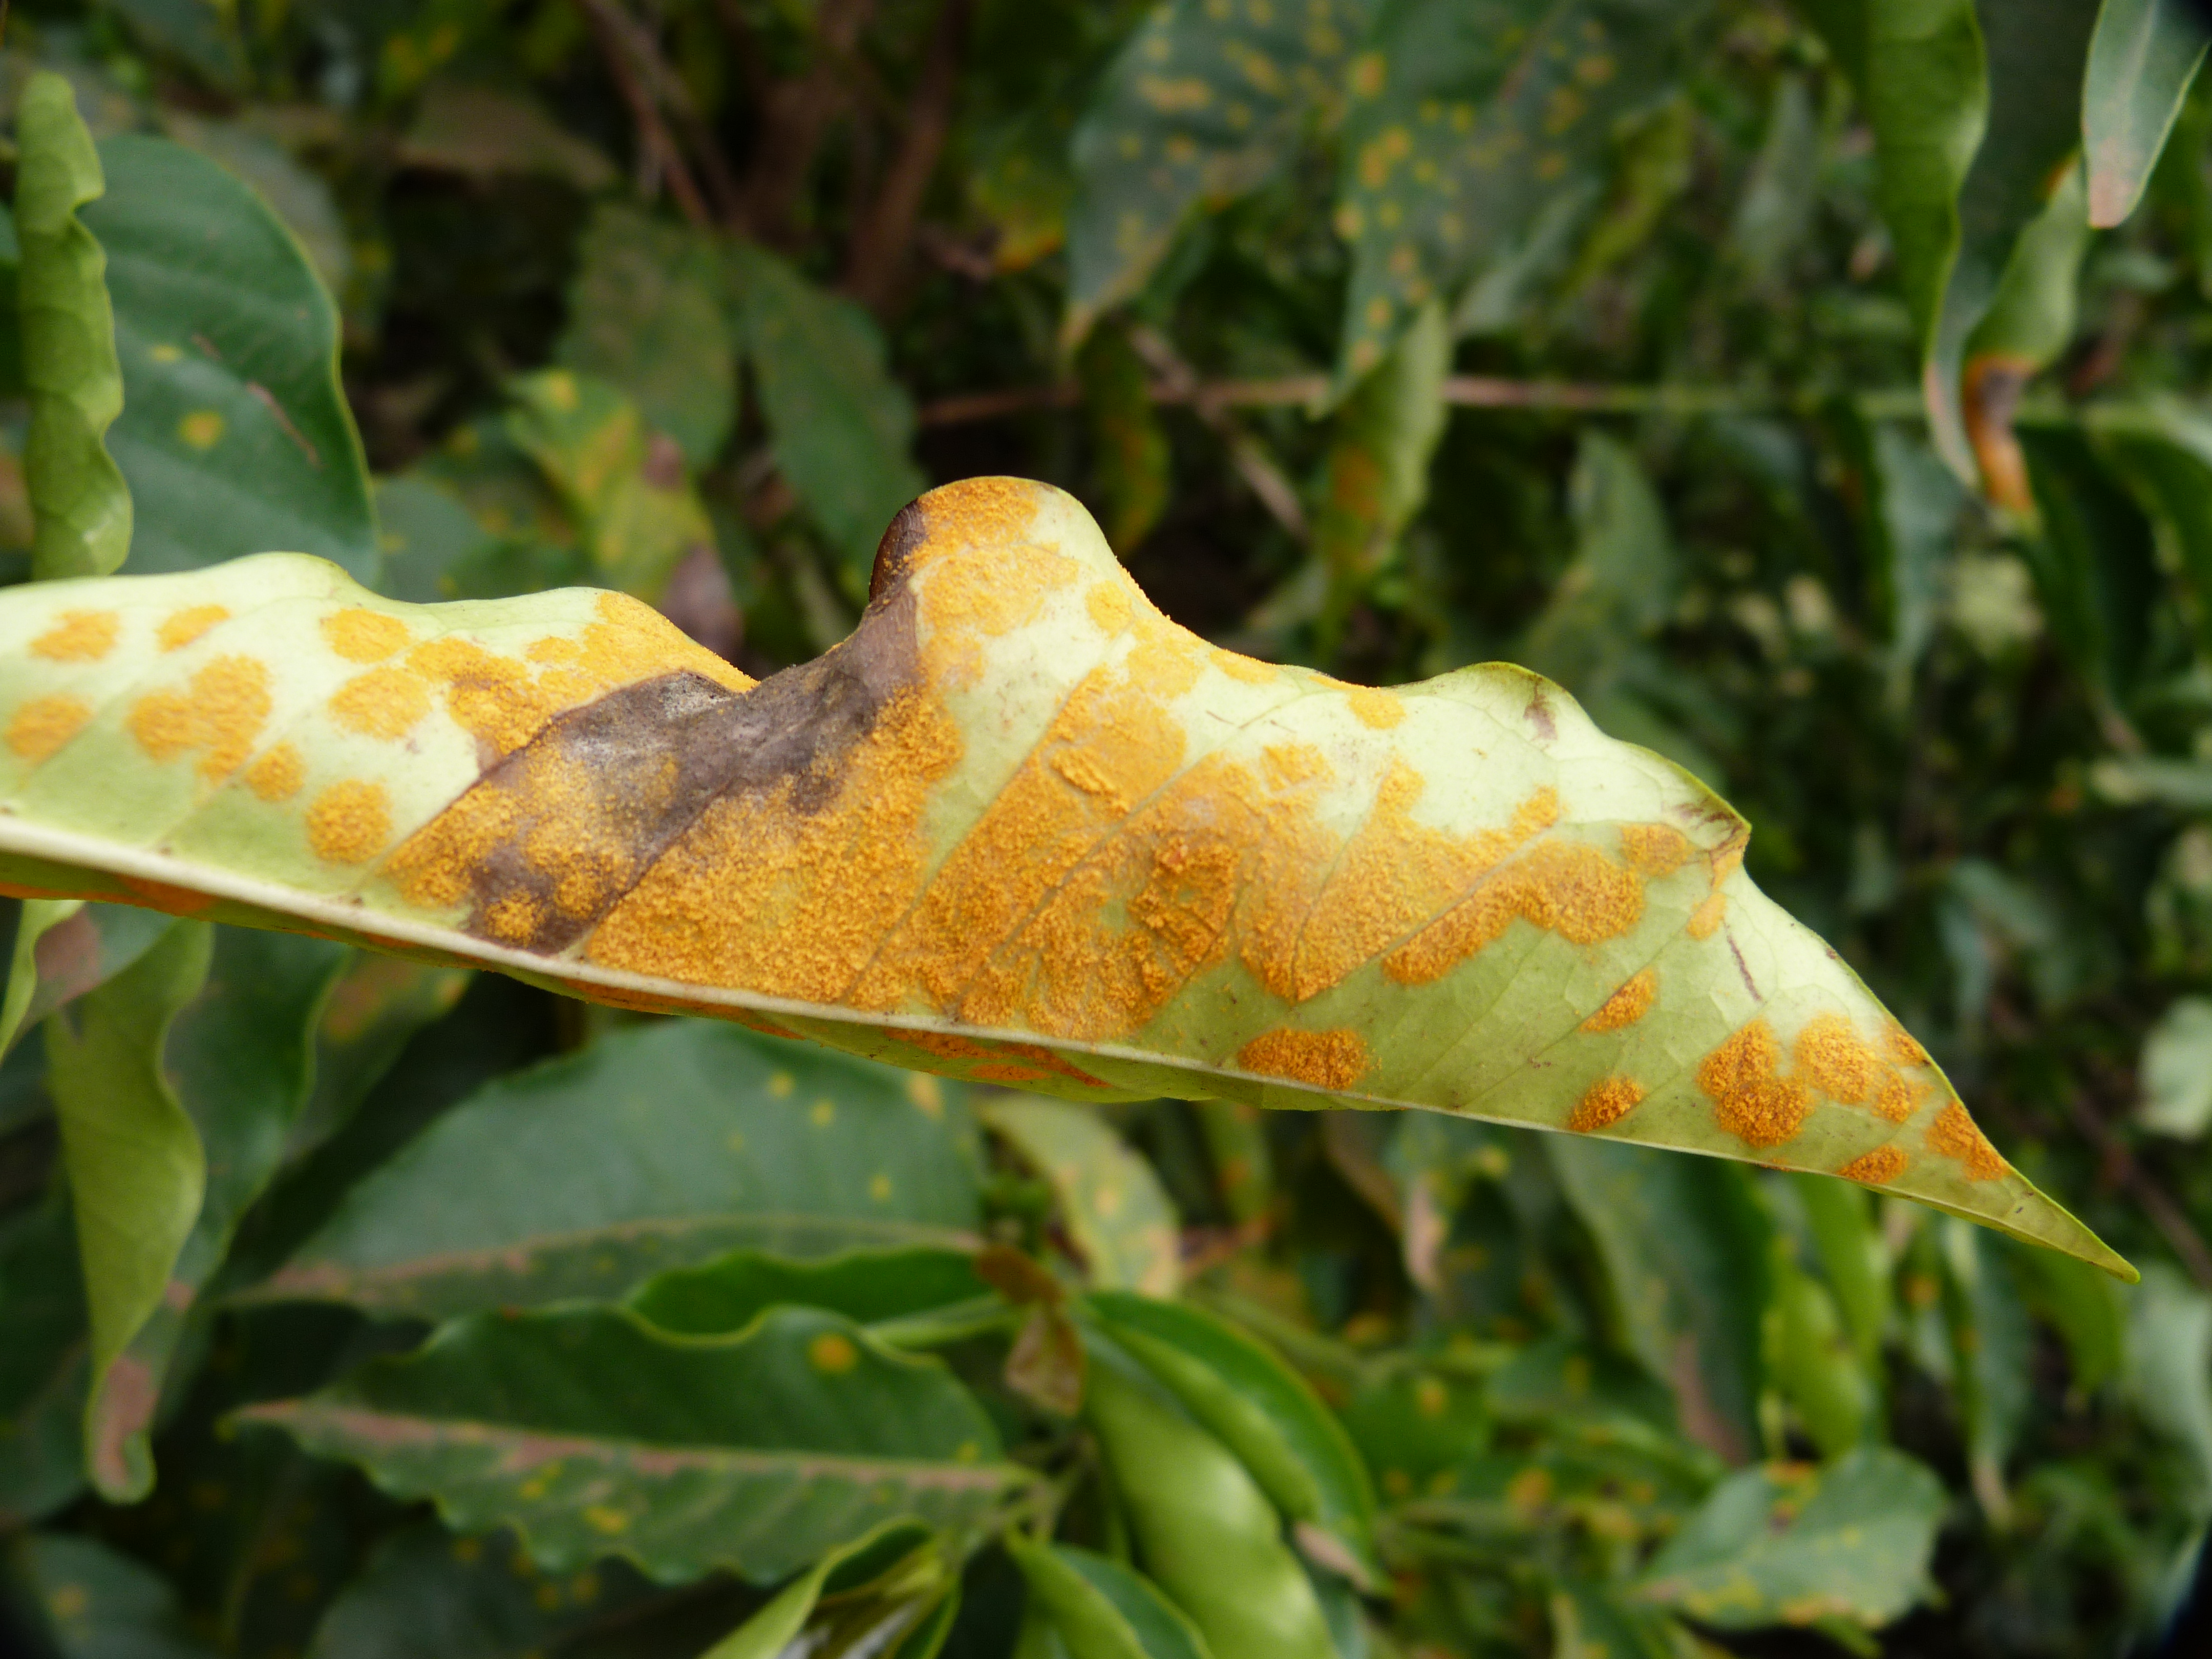 Hemileia vastatrix or coffee rust infecting a coffee leaf on Karen Blixen’s property in Kenya.